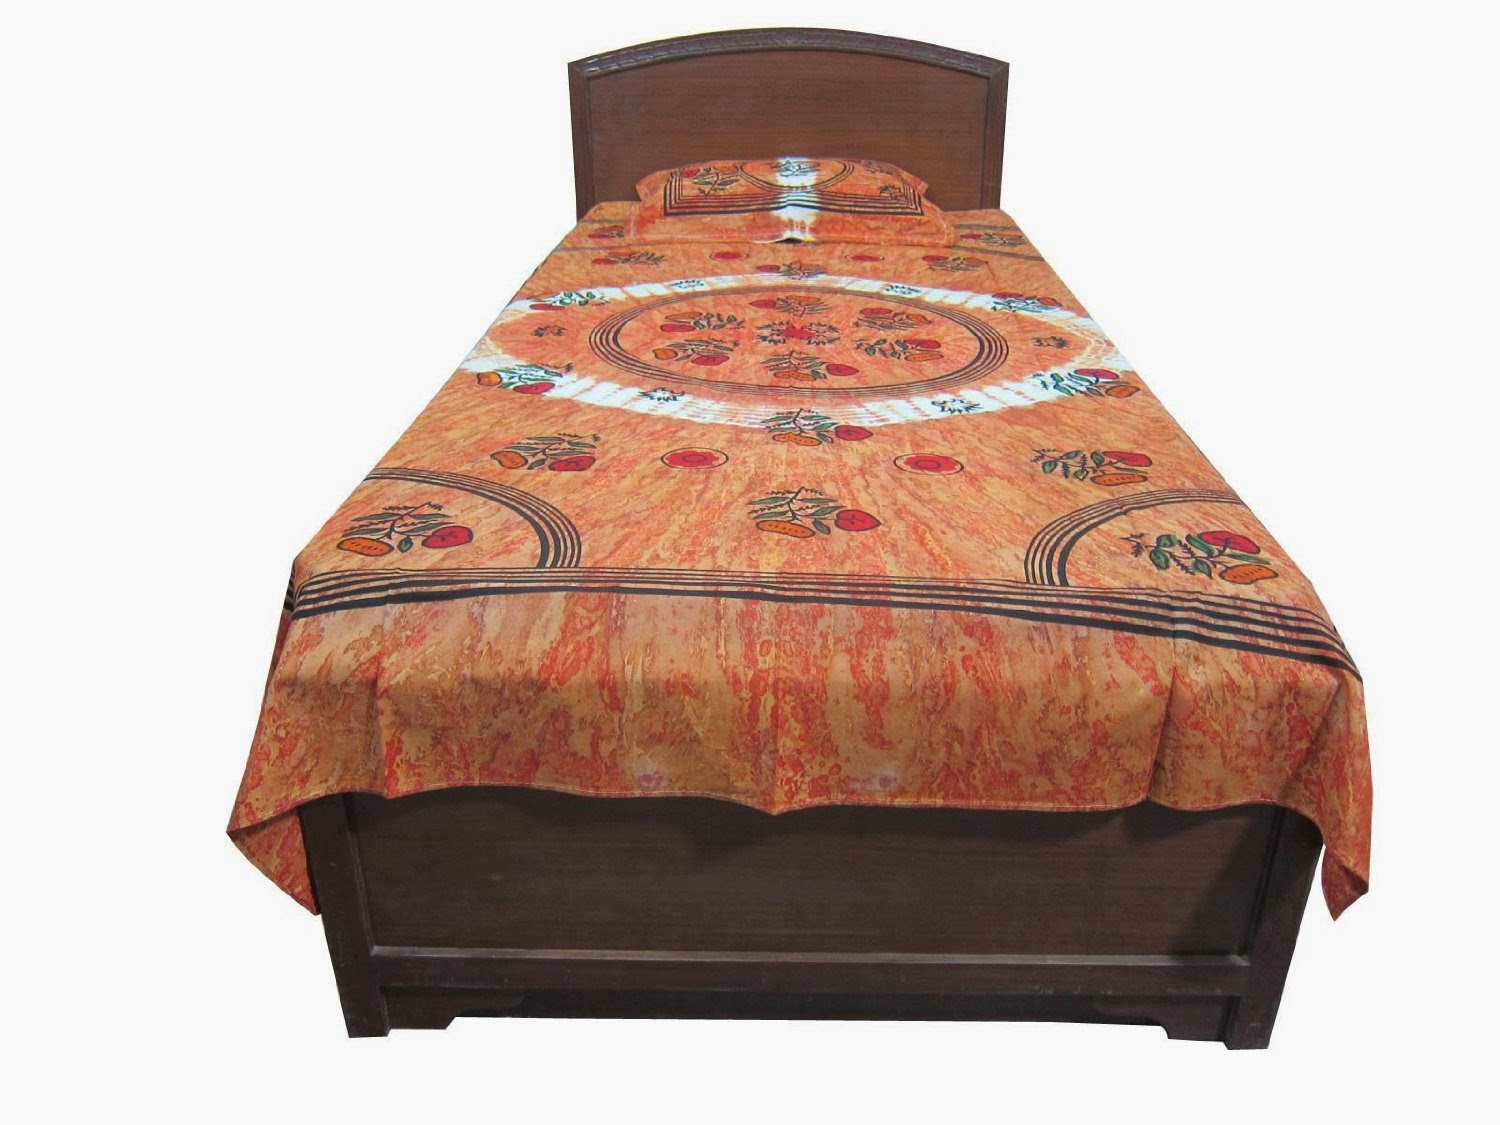 http://www.amazon.com/Hippie-Indian-Tapestry-Bedspread-Blanket/dp/B00RMJUH00/ref=sr_1_13?m=A1FLPADQPBV8TK&s=merchant-items&ie=UTF8&qid=1426756963&sr=1-13&keywords=bedspread